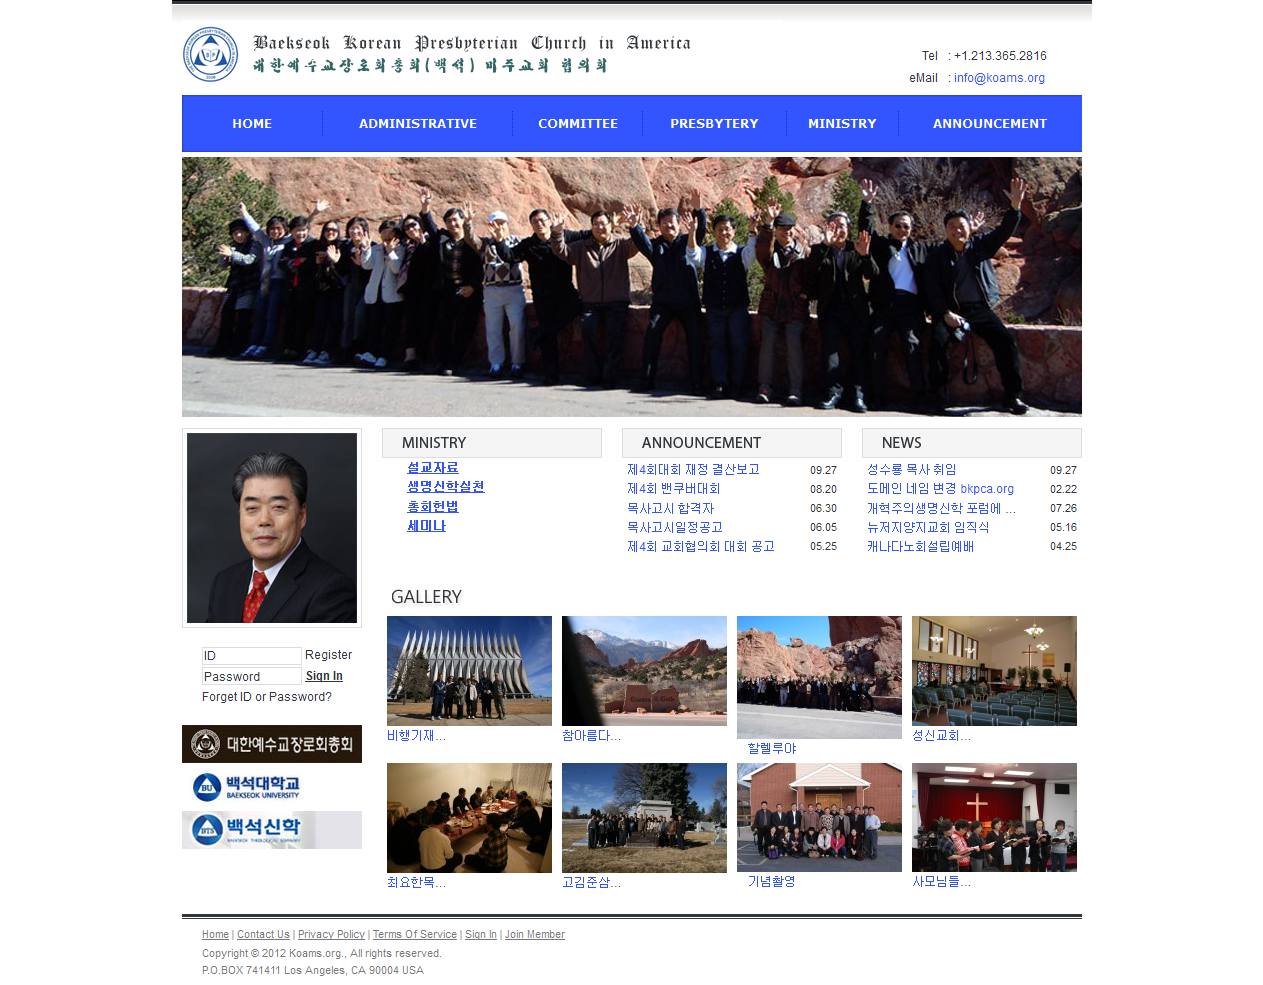 FireShot Screen Capture #250 - 'The Baekseok Korean Presbyterian Church in America, 대한예수교장로회총회 (백석)미주교회협의회' - koams_org_web.png